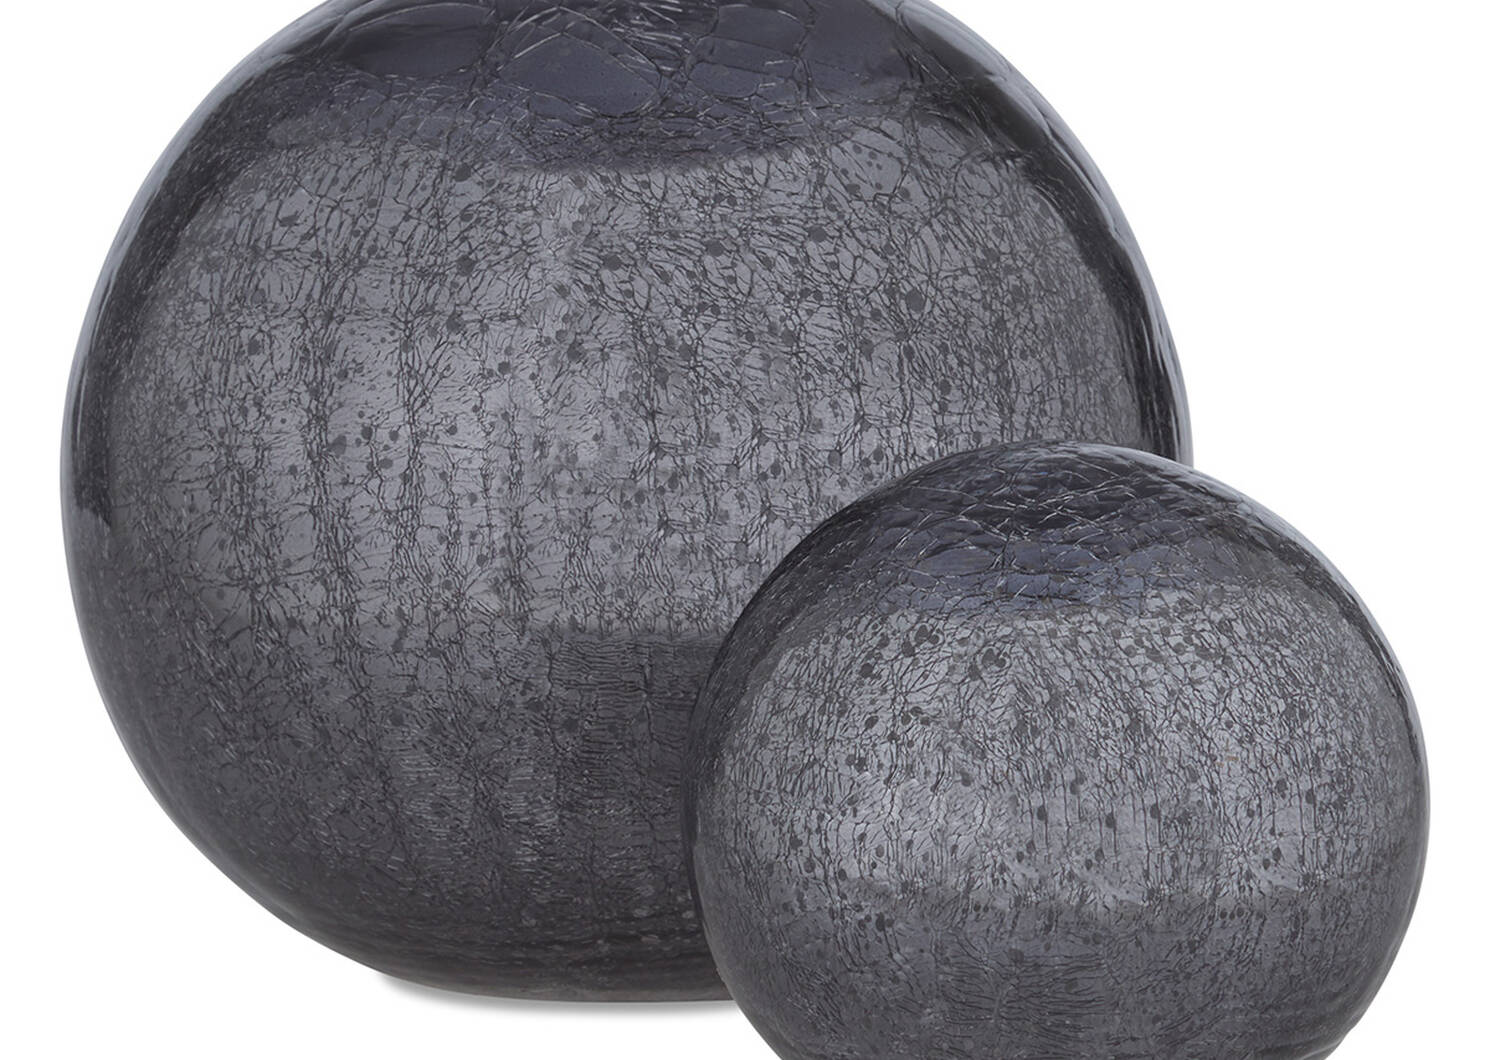 Donatella Decor Ball Small Charcoal